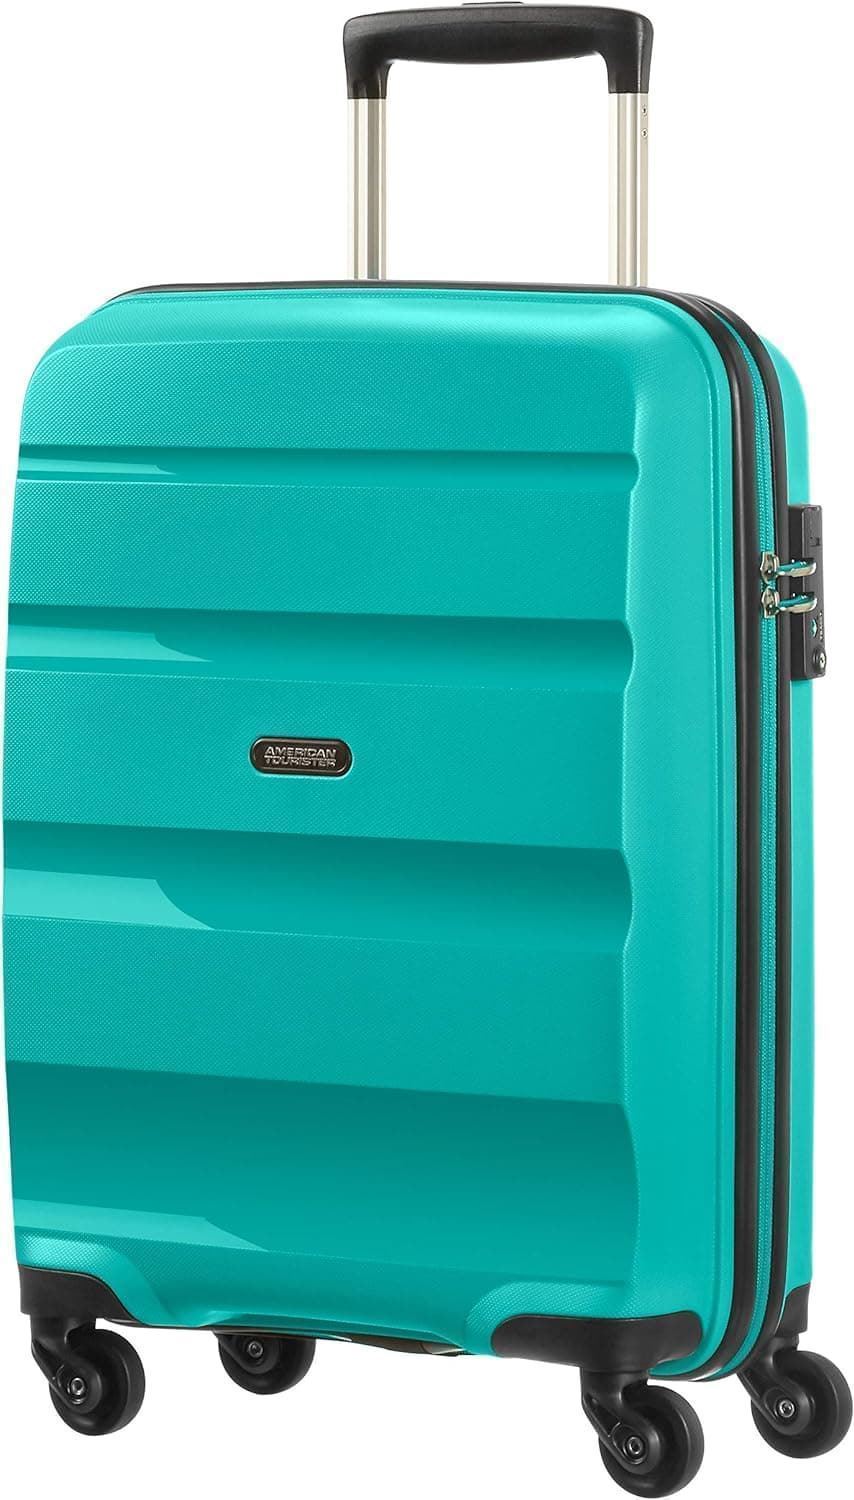 American Tourister Maleta de cabina Bon Air 55x40x20 cms Muy Resistente Color Turquoise - Imagen 1